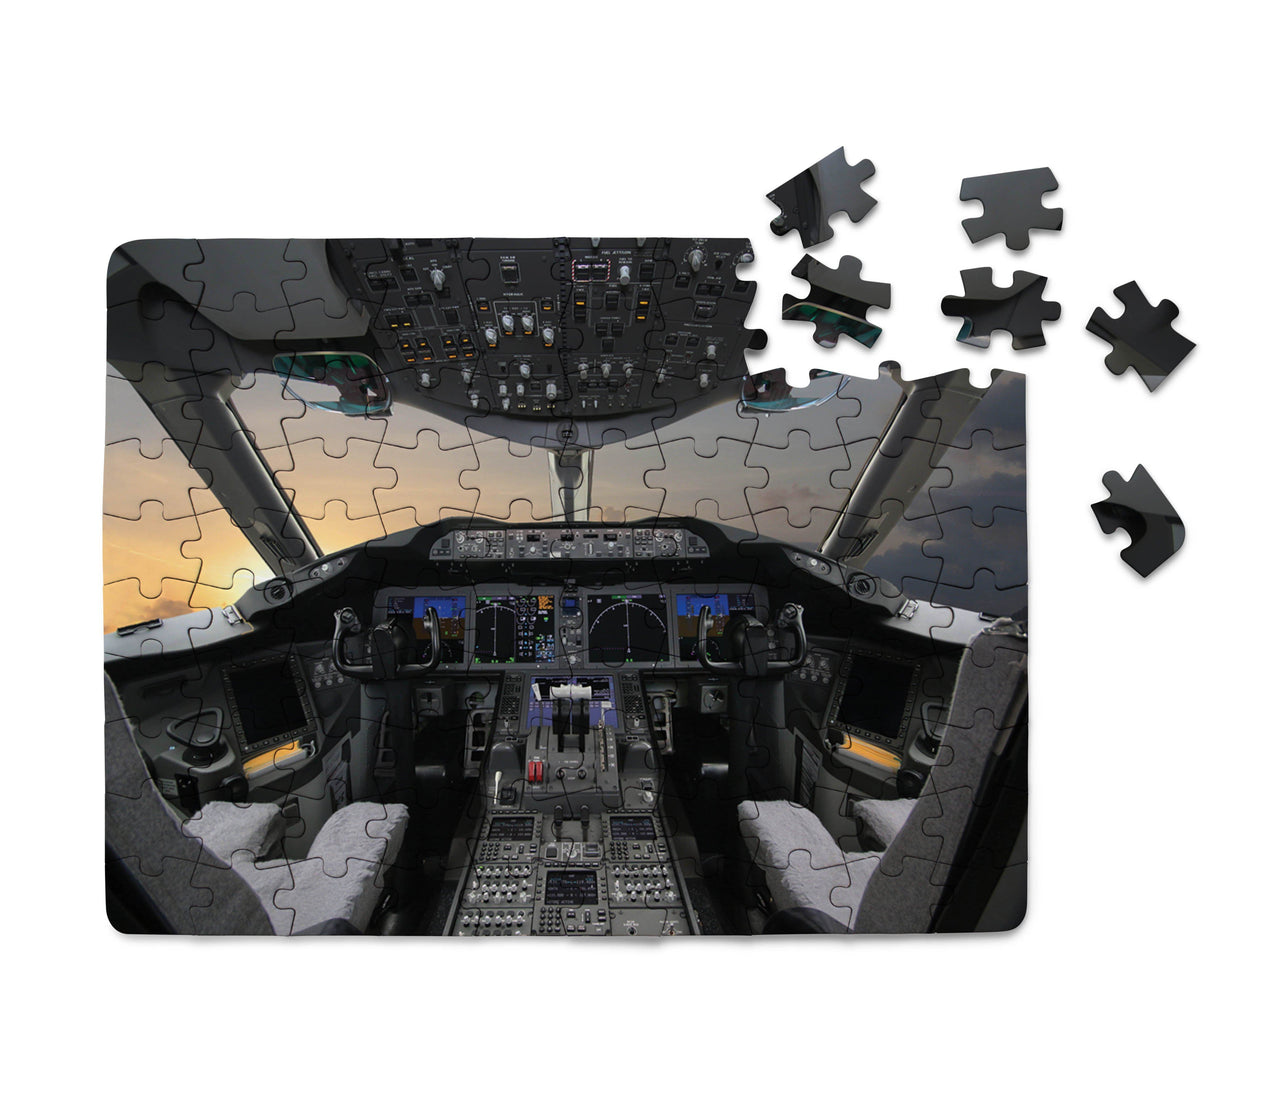 Boeing 787 Cockpit Printed Puzzles Aviation Shop 